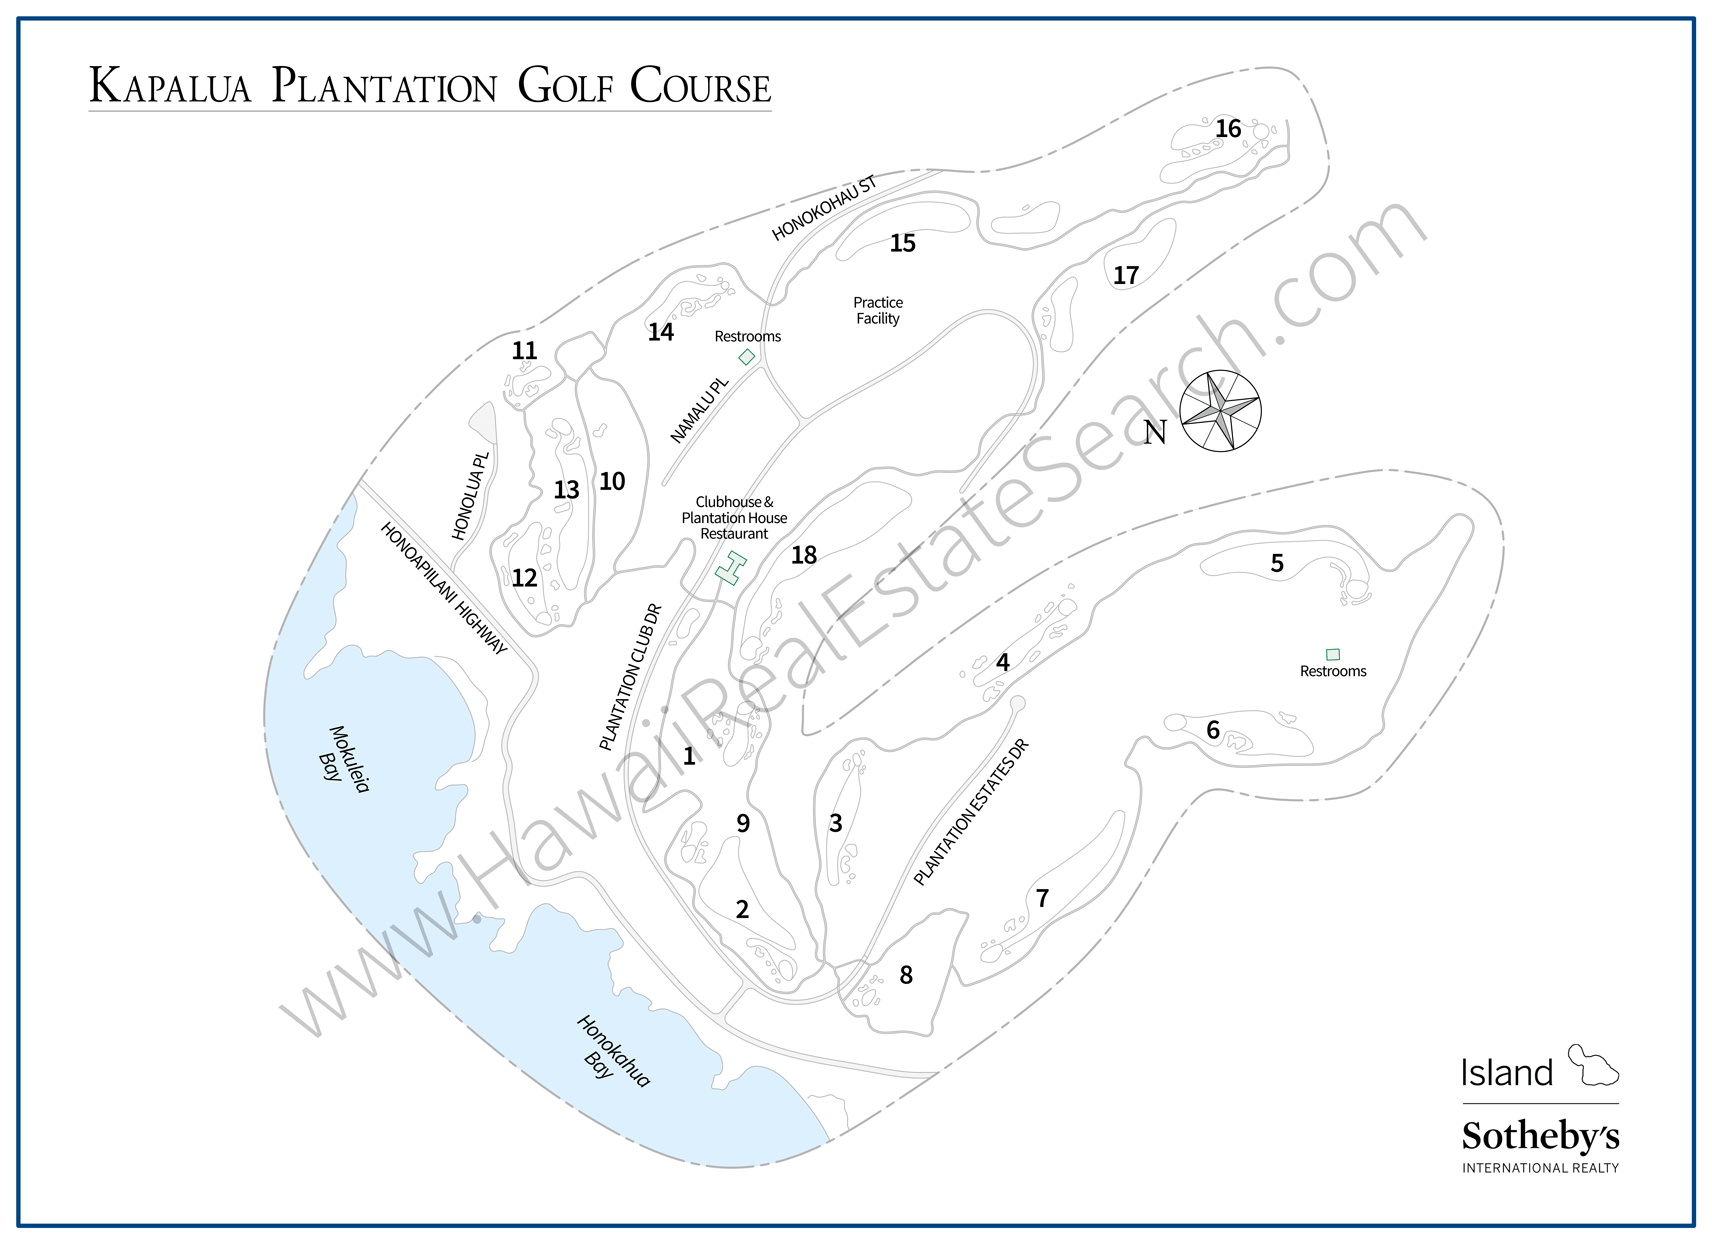 Kapalua Plantation Course - Golf